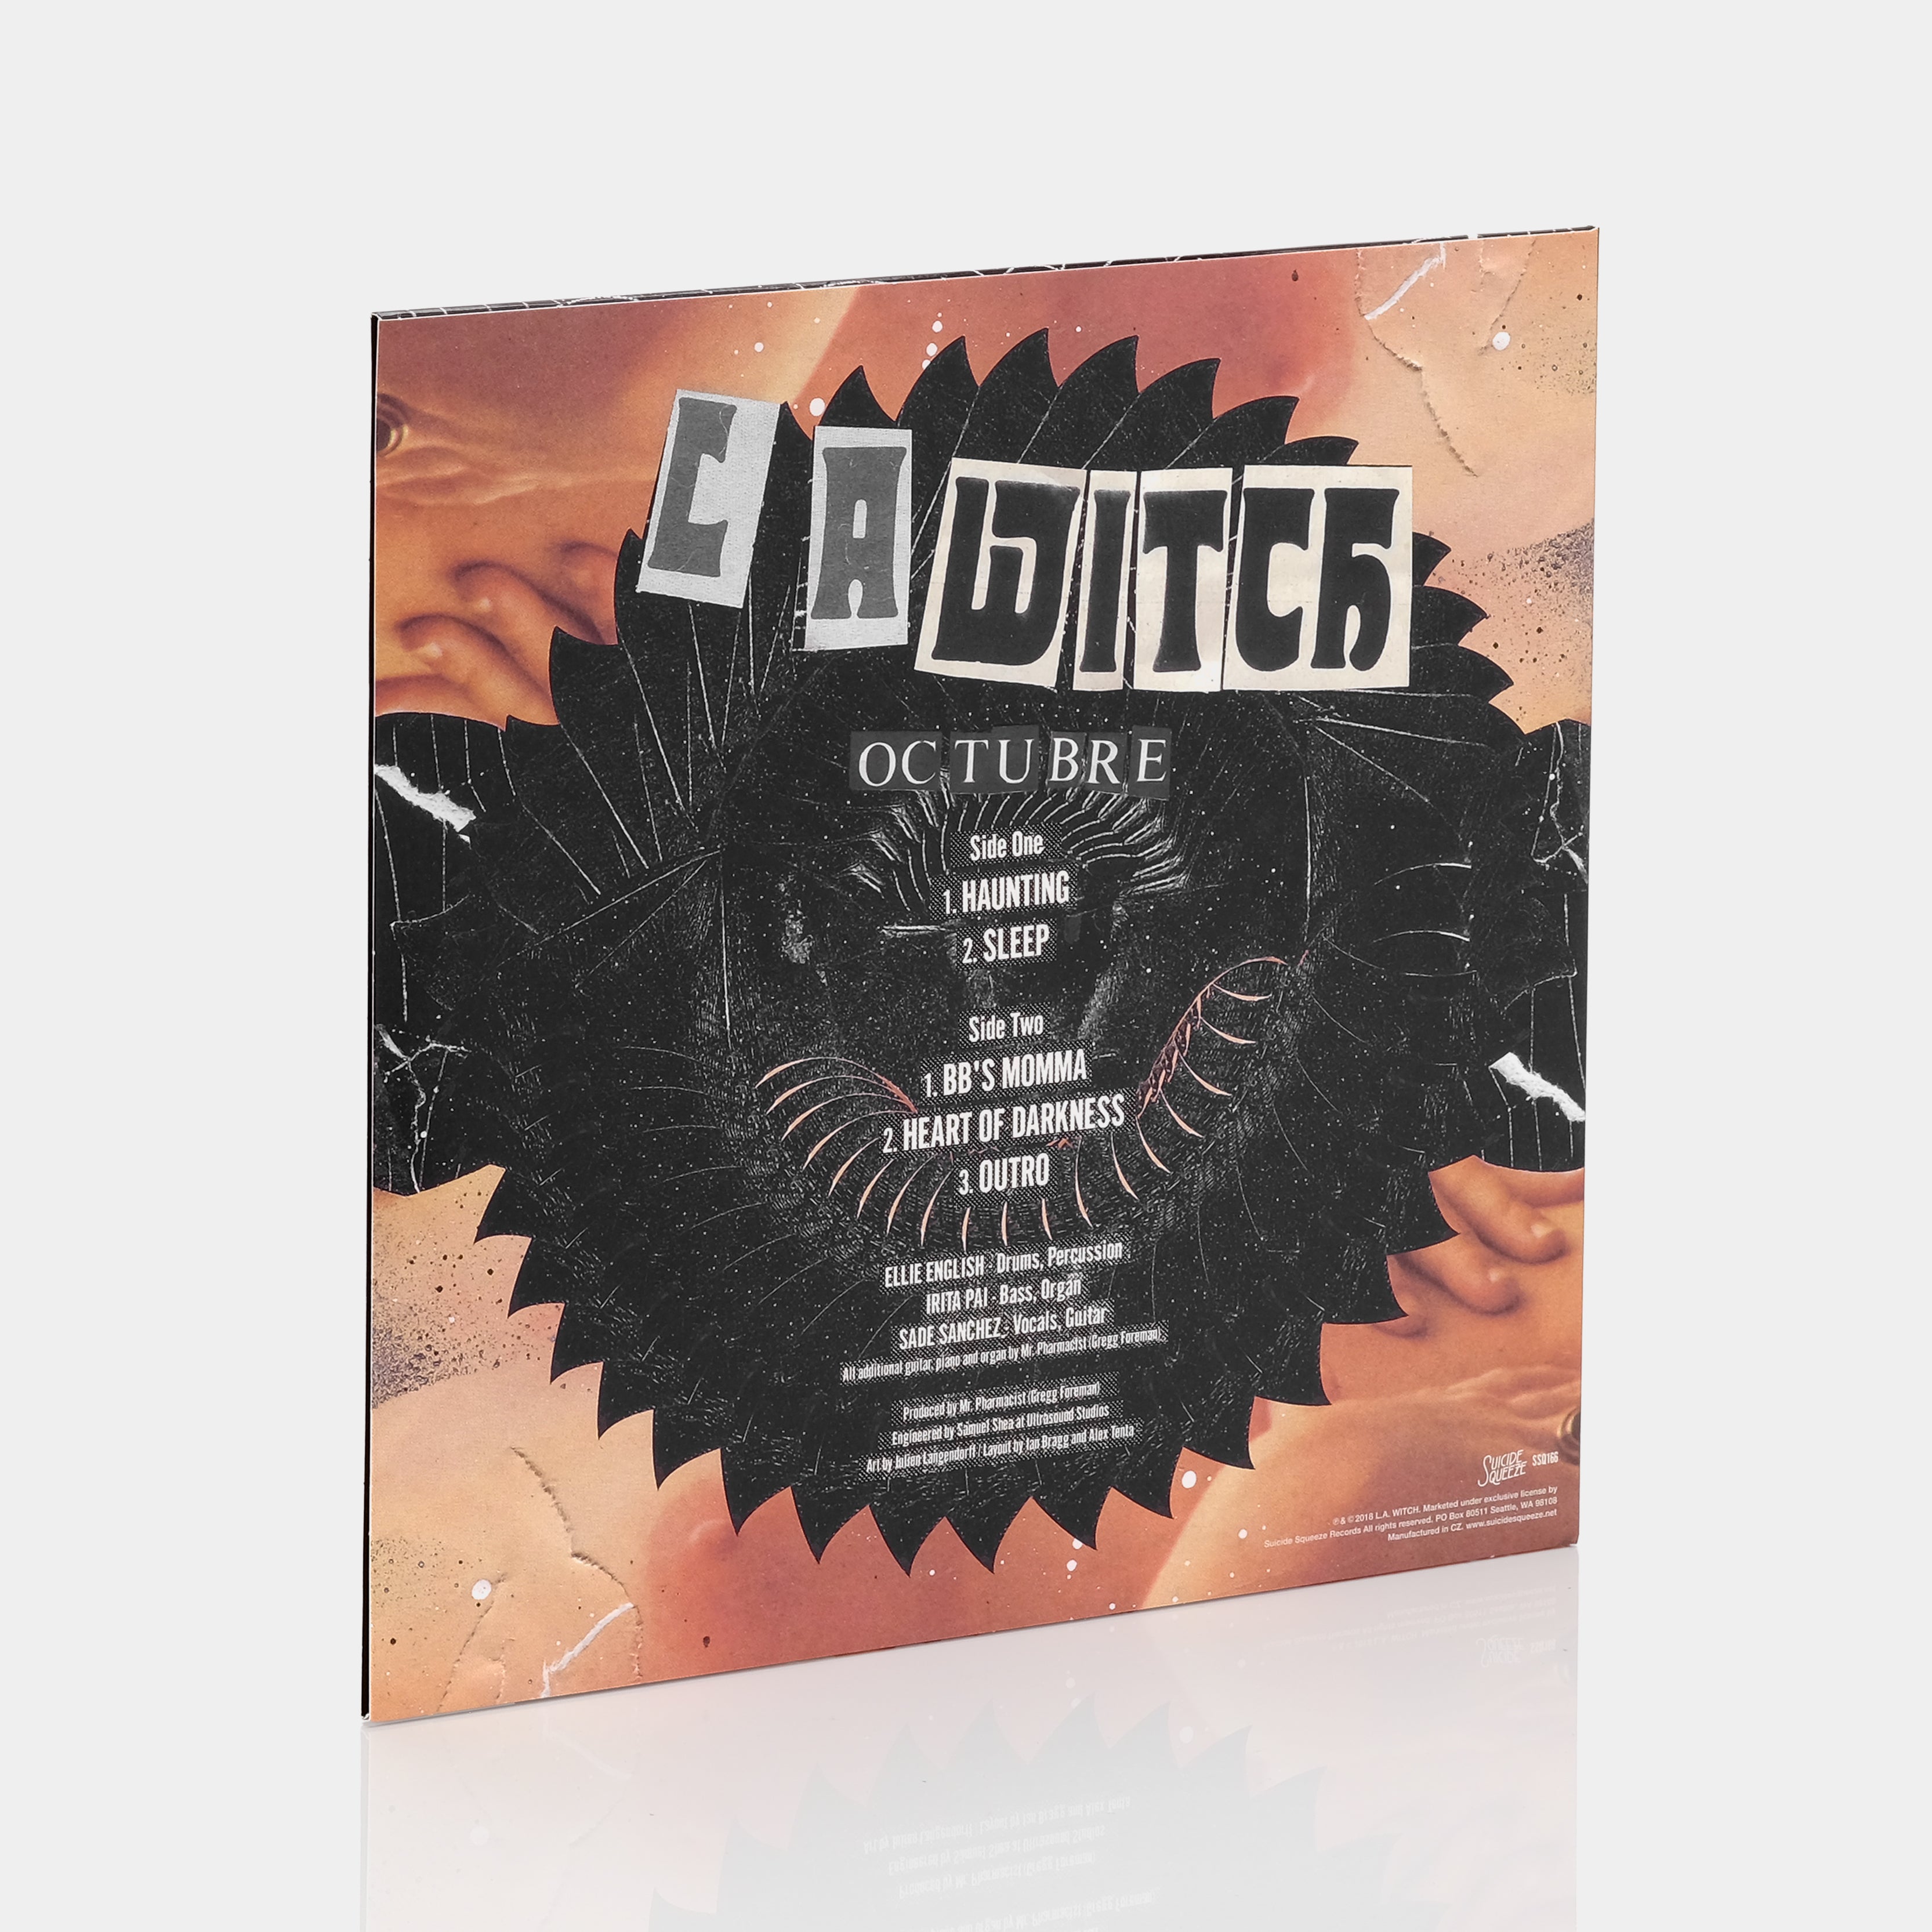 L.A. Witch - Octubre LP Orange & Black Splatter Vinyl Record